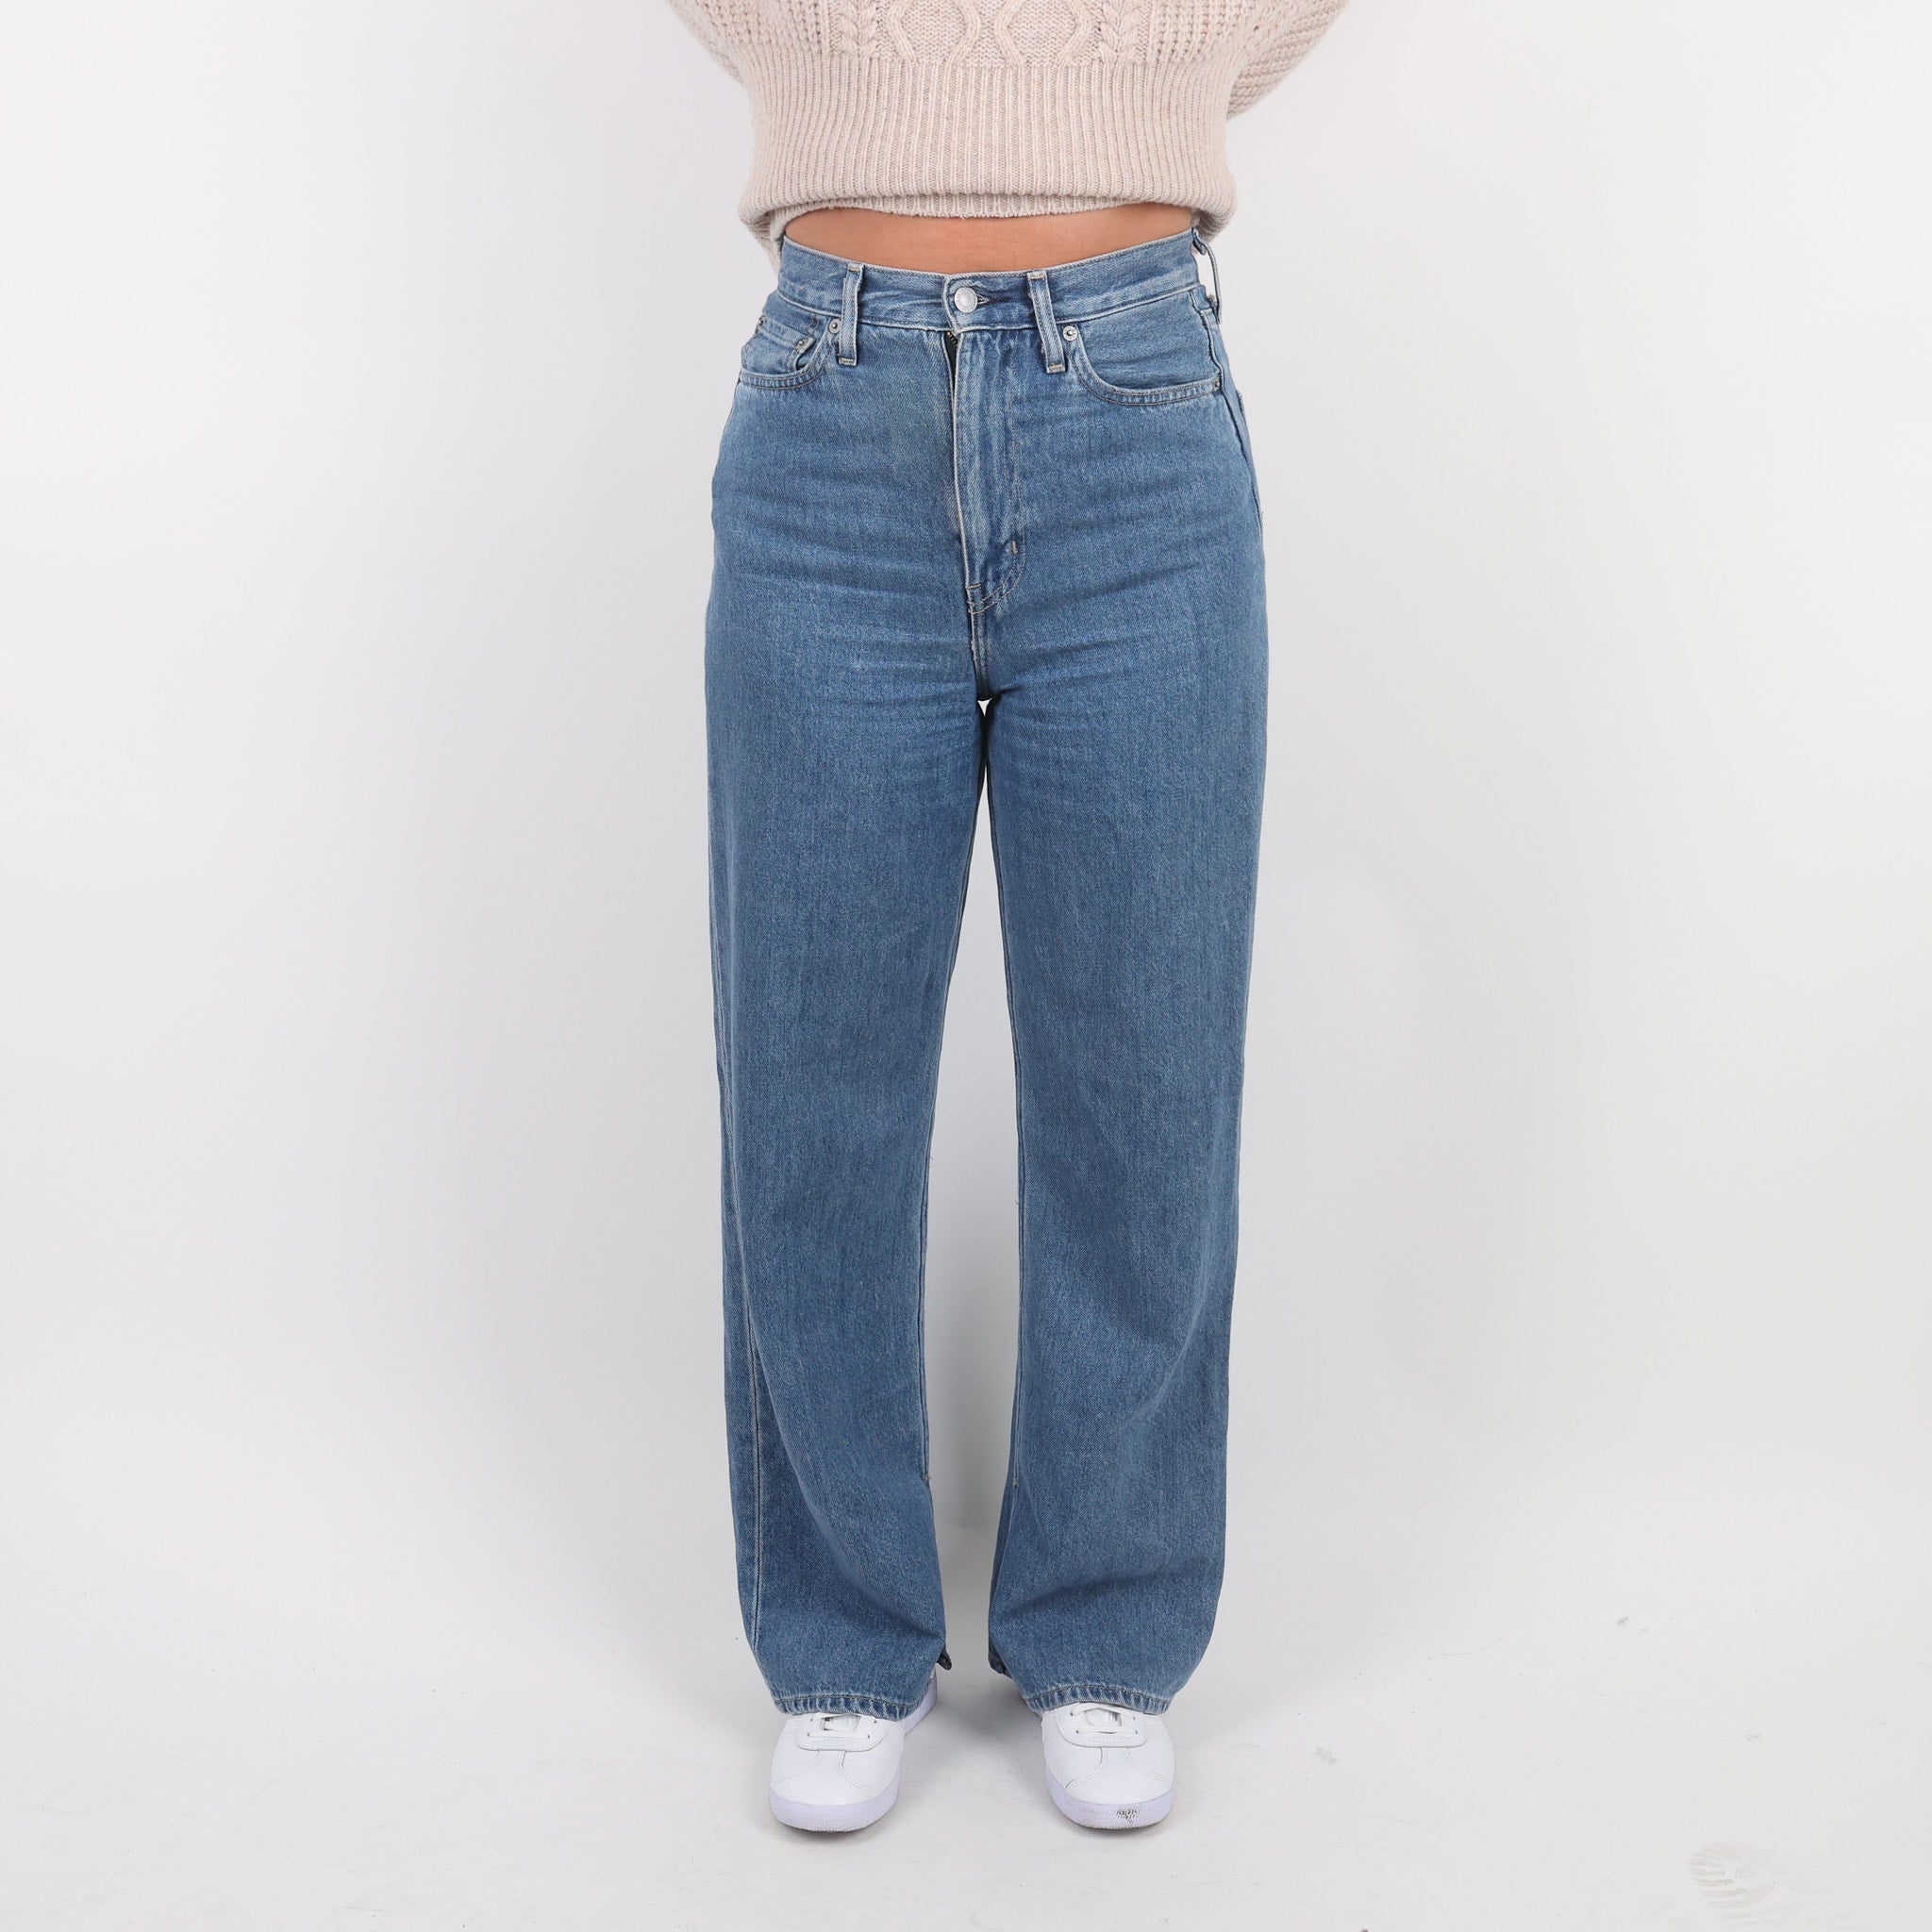 Jeans, Waist 27